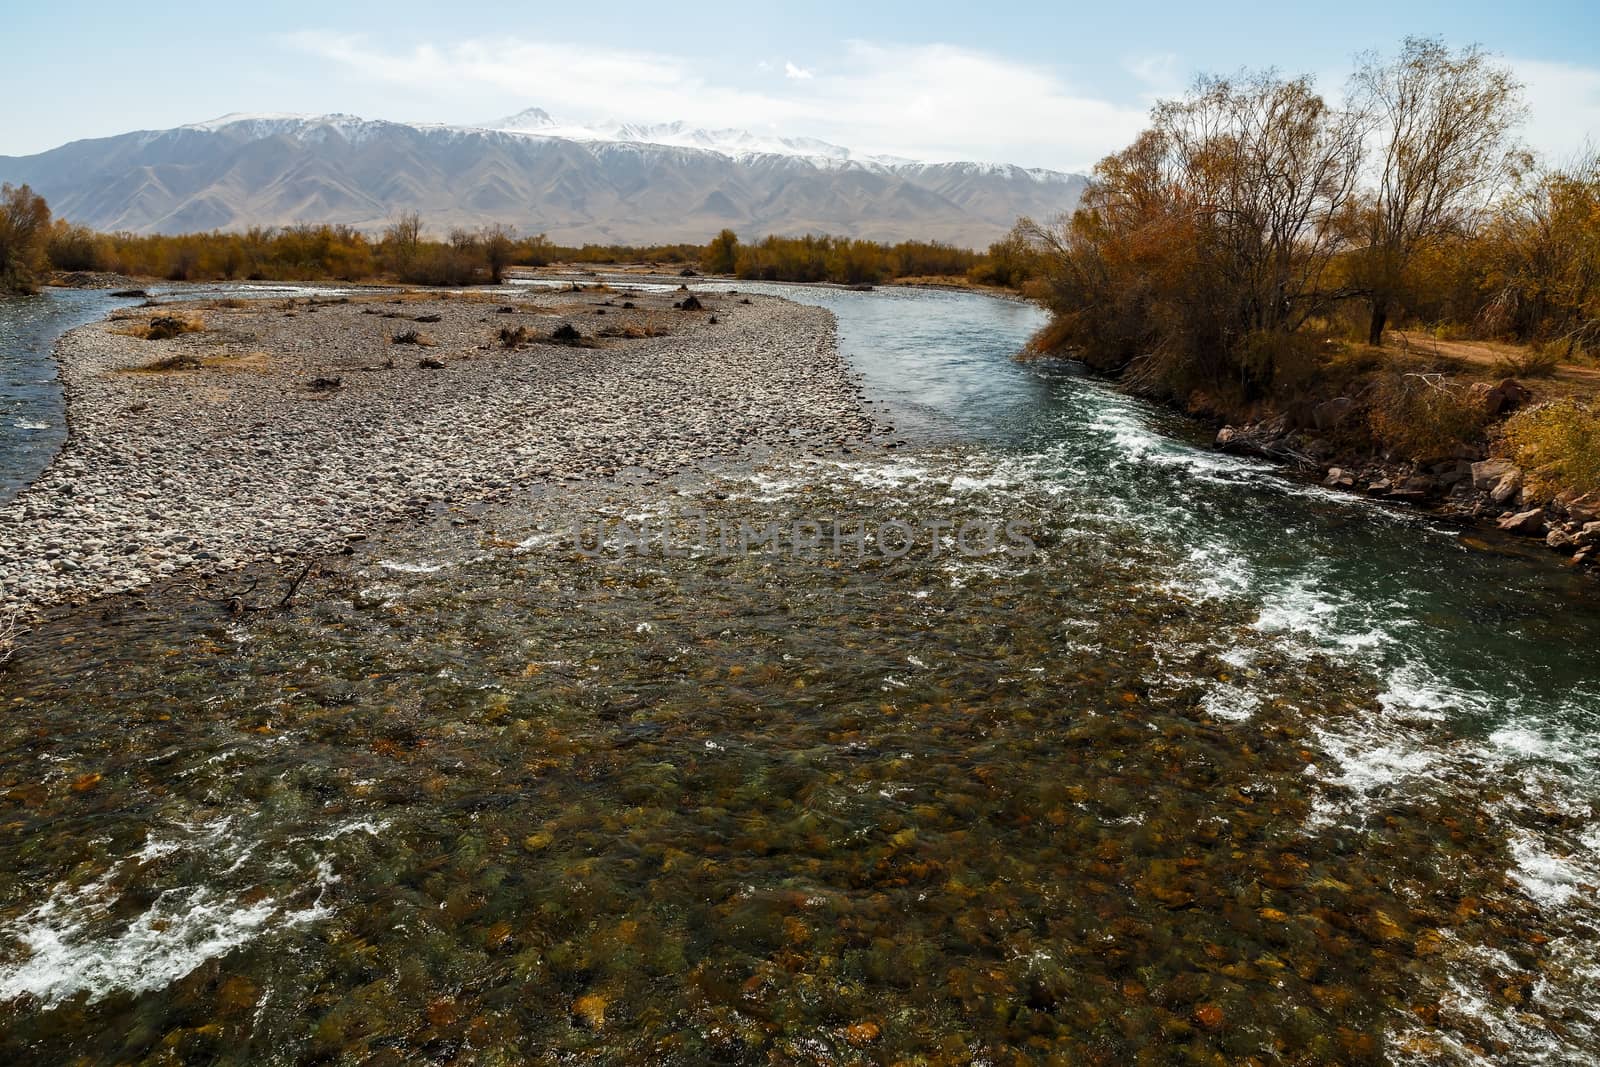 West Karakol River. Mountain river in the Suusamyr Valley in Kyrgyzstan.